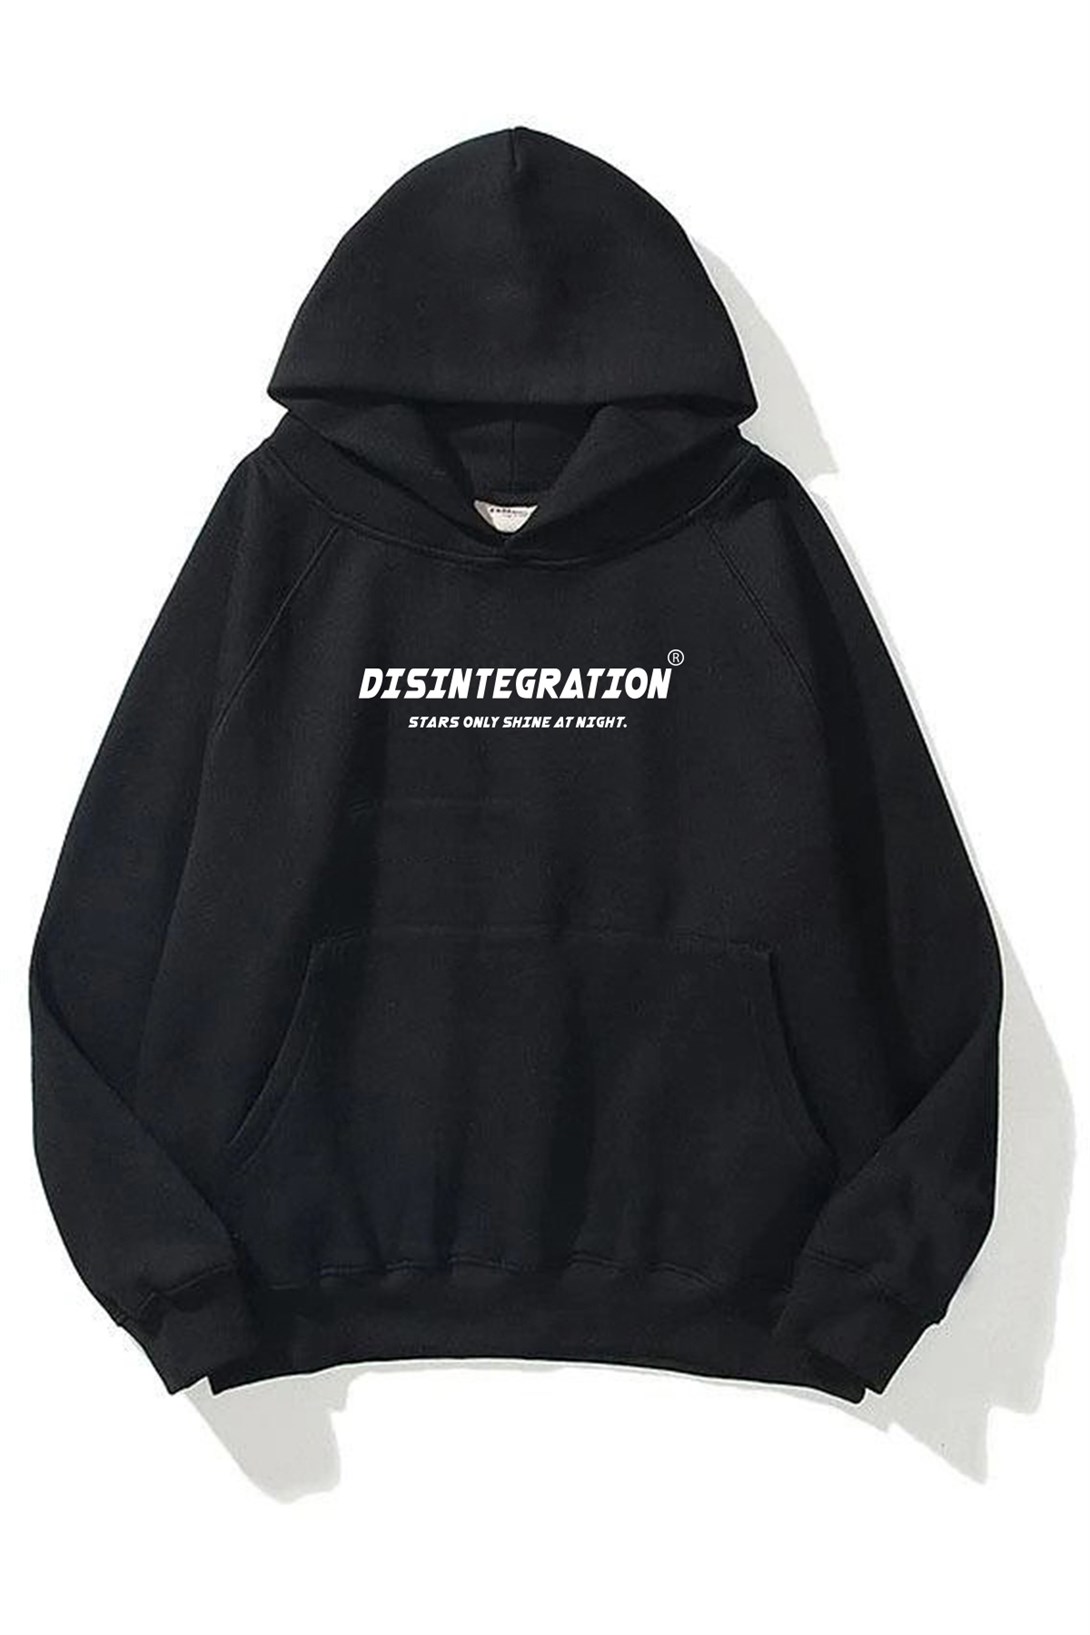 Trendiz Disintegration Unisex Sweatshirt